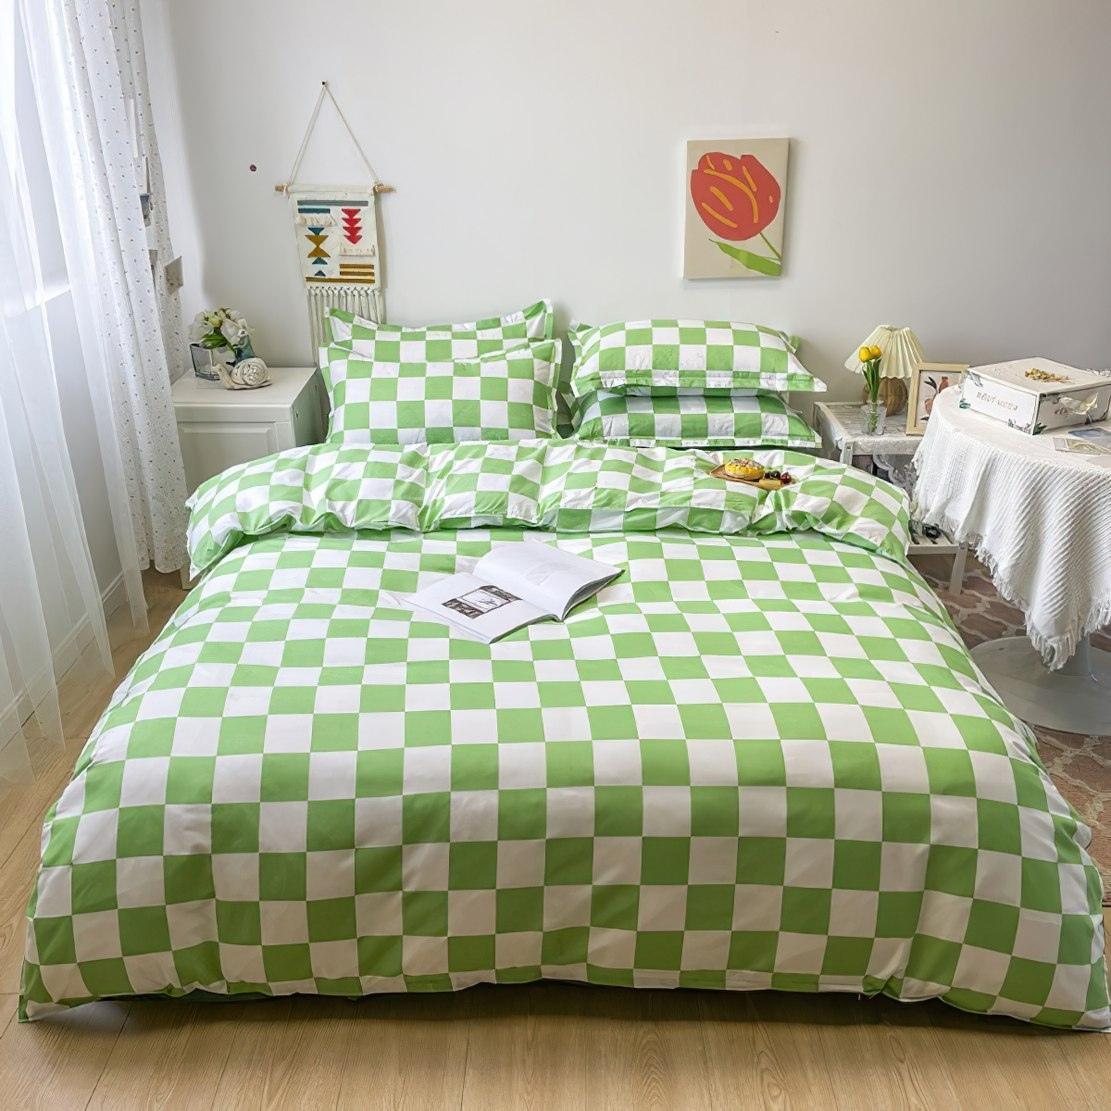 Green white checkerboard bedding set